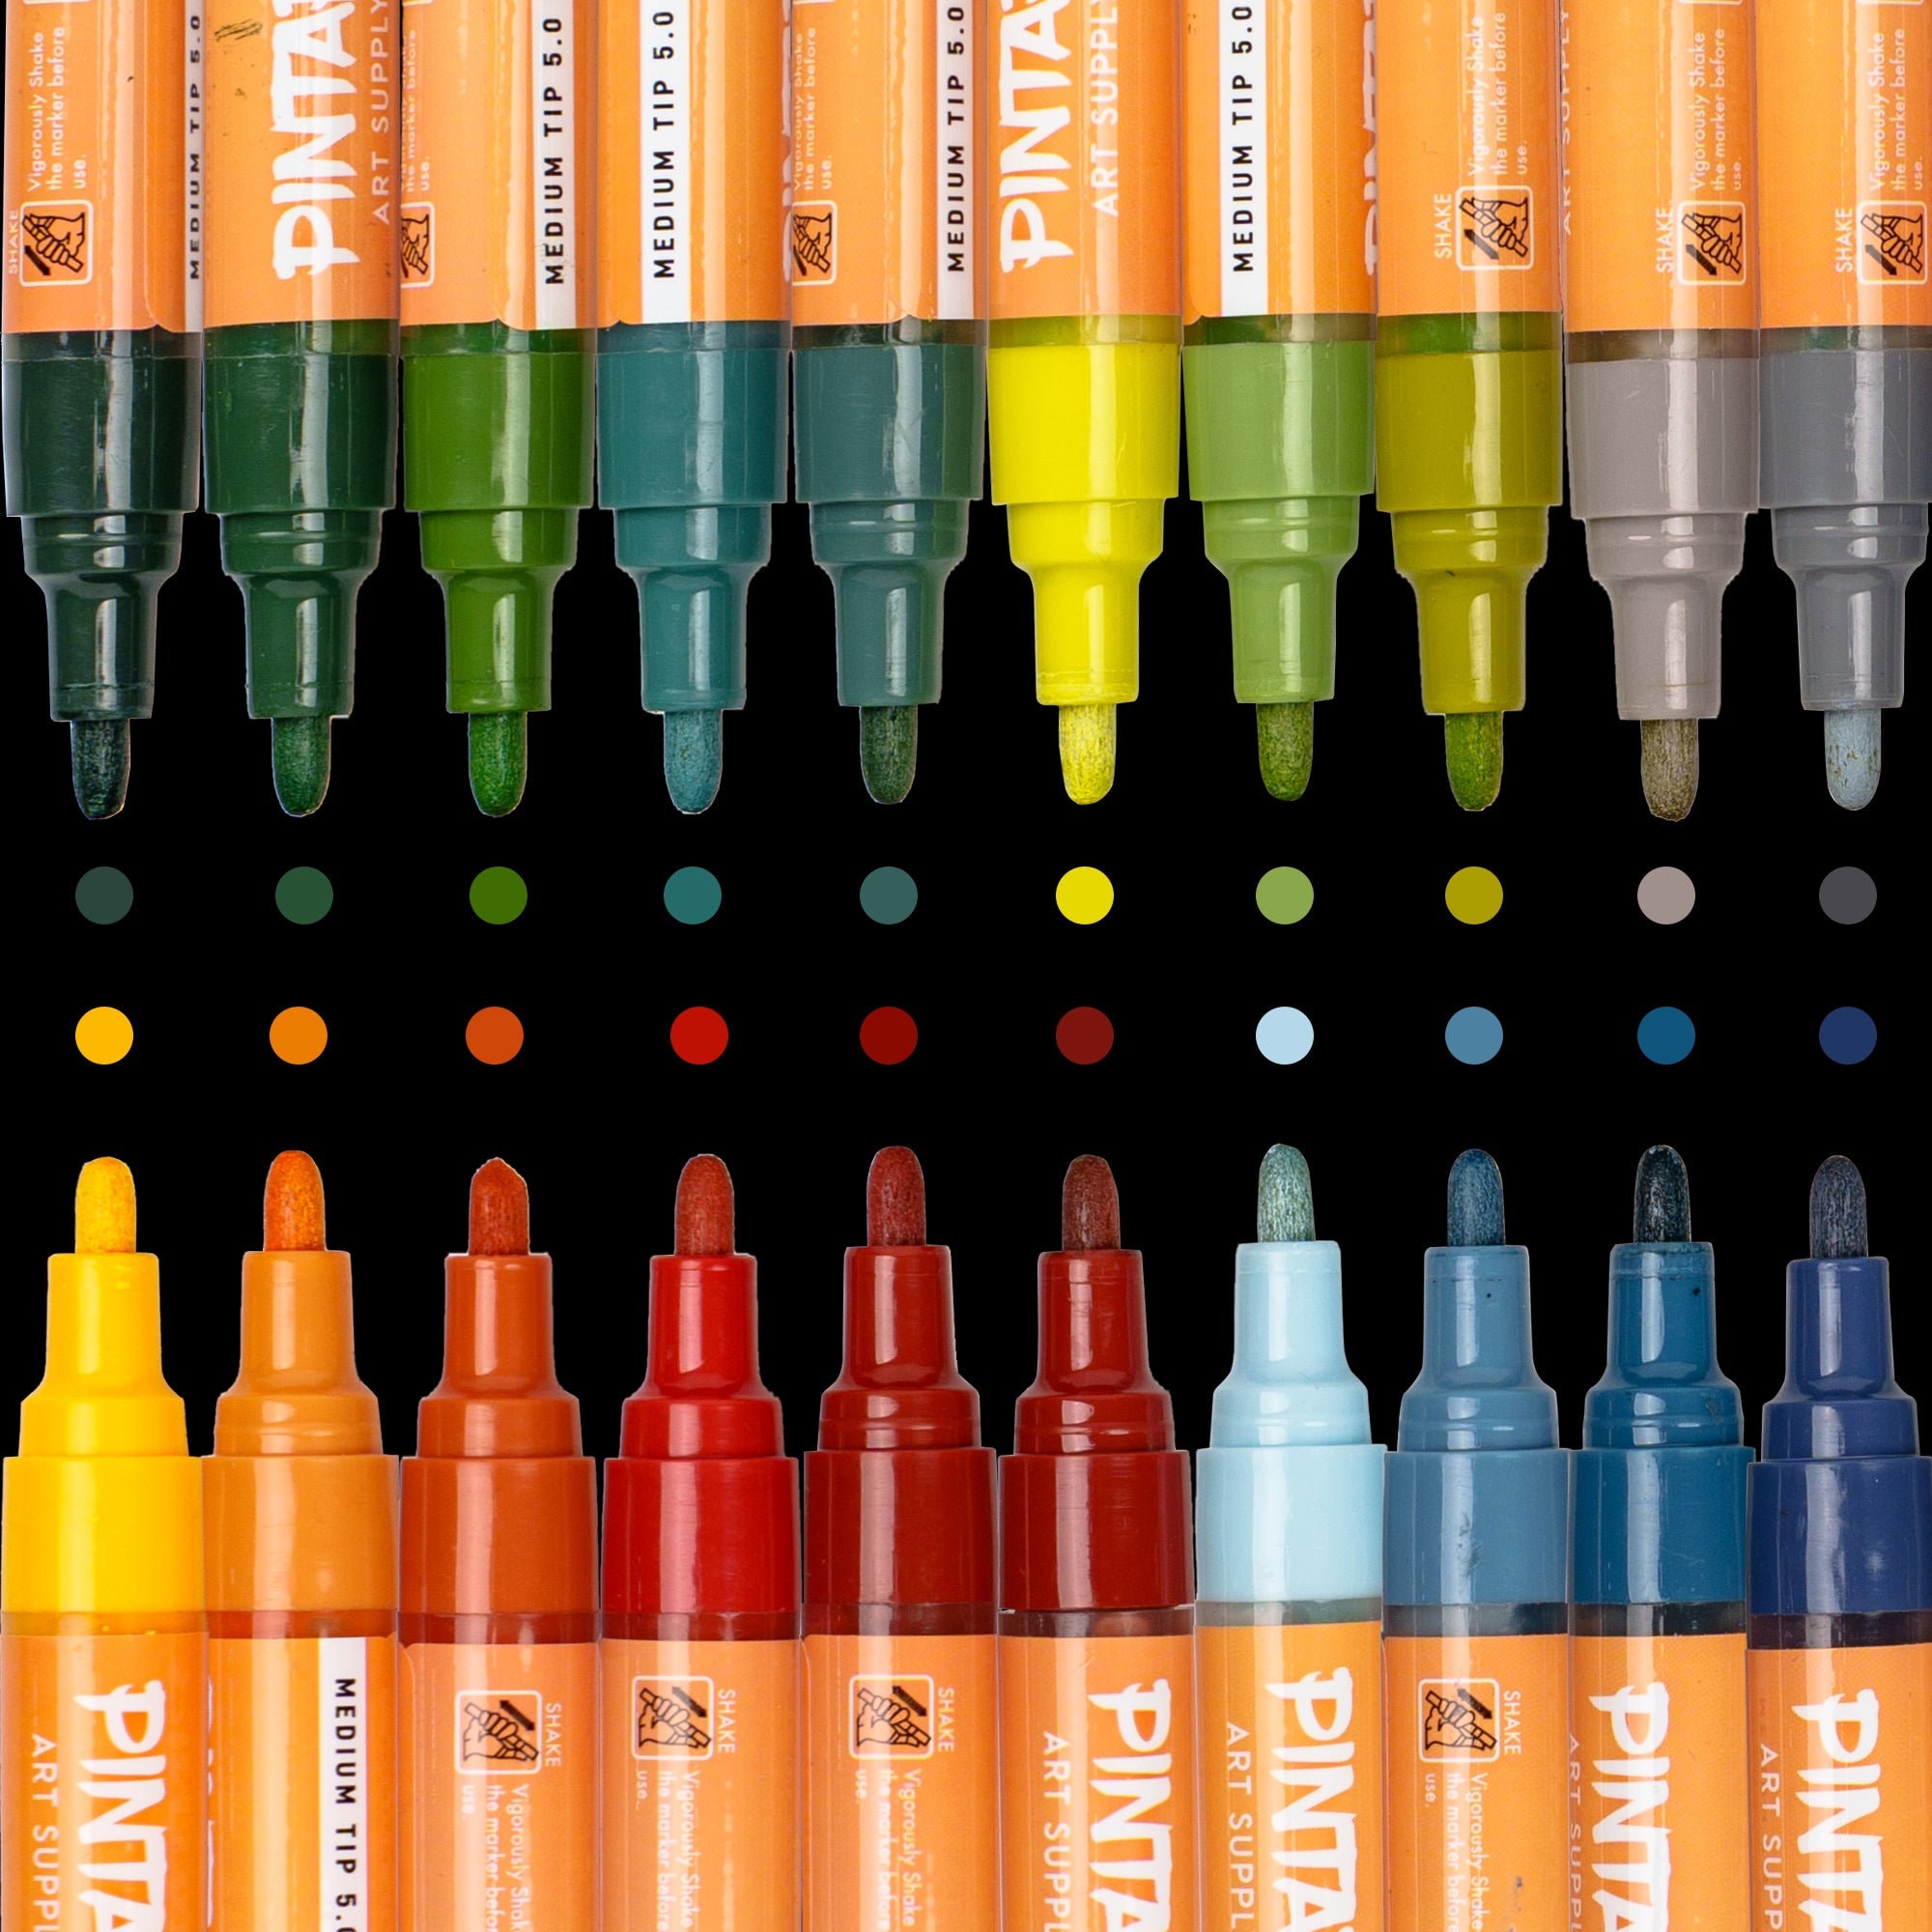 Pintar Art Acrylic Premium Pastel Paint Pens Medium Tip 5.0mm